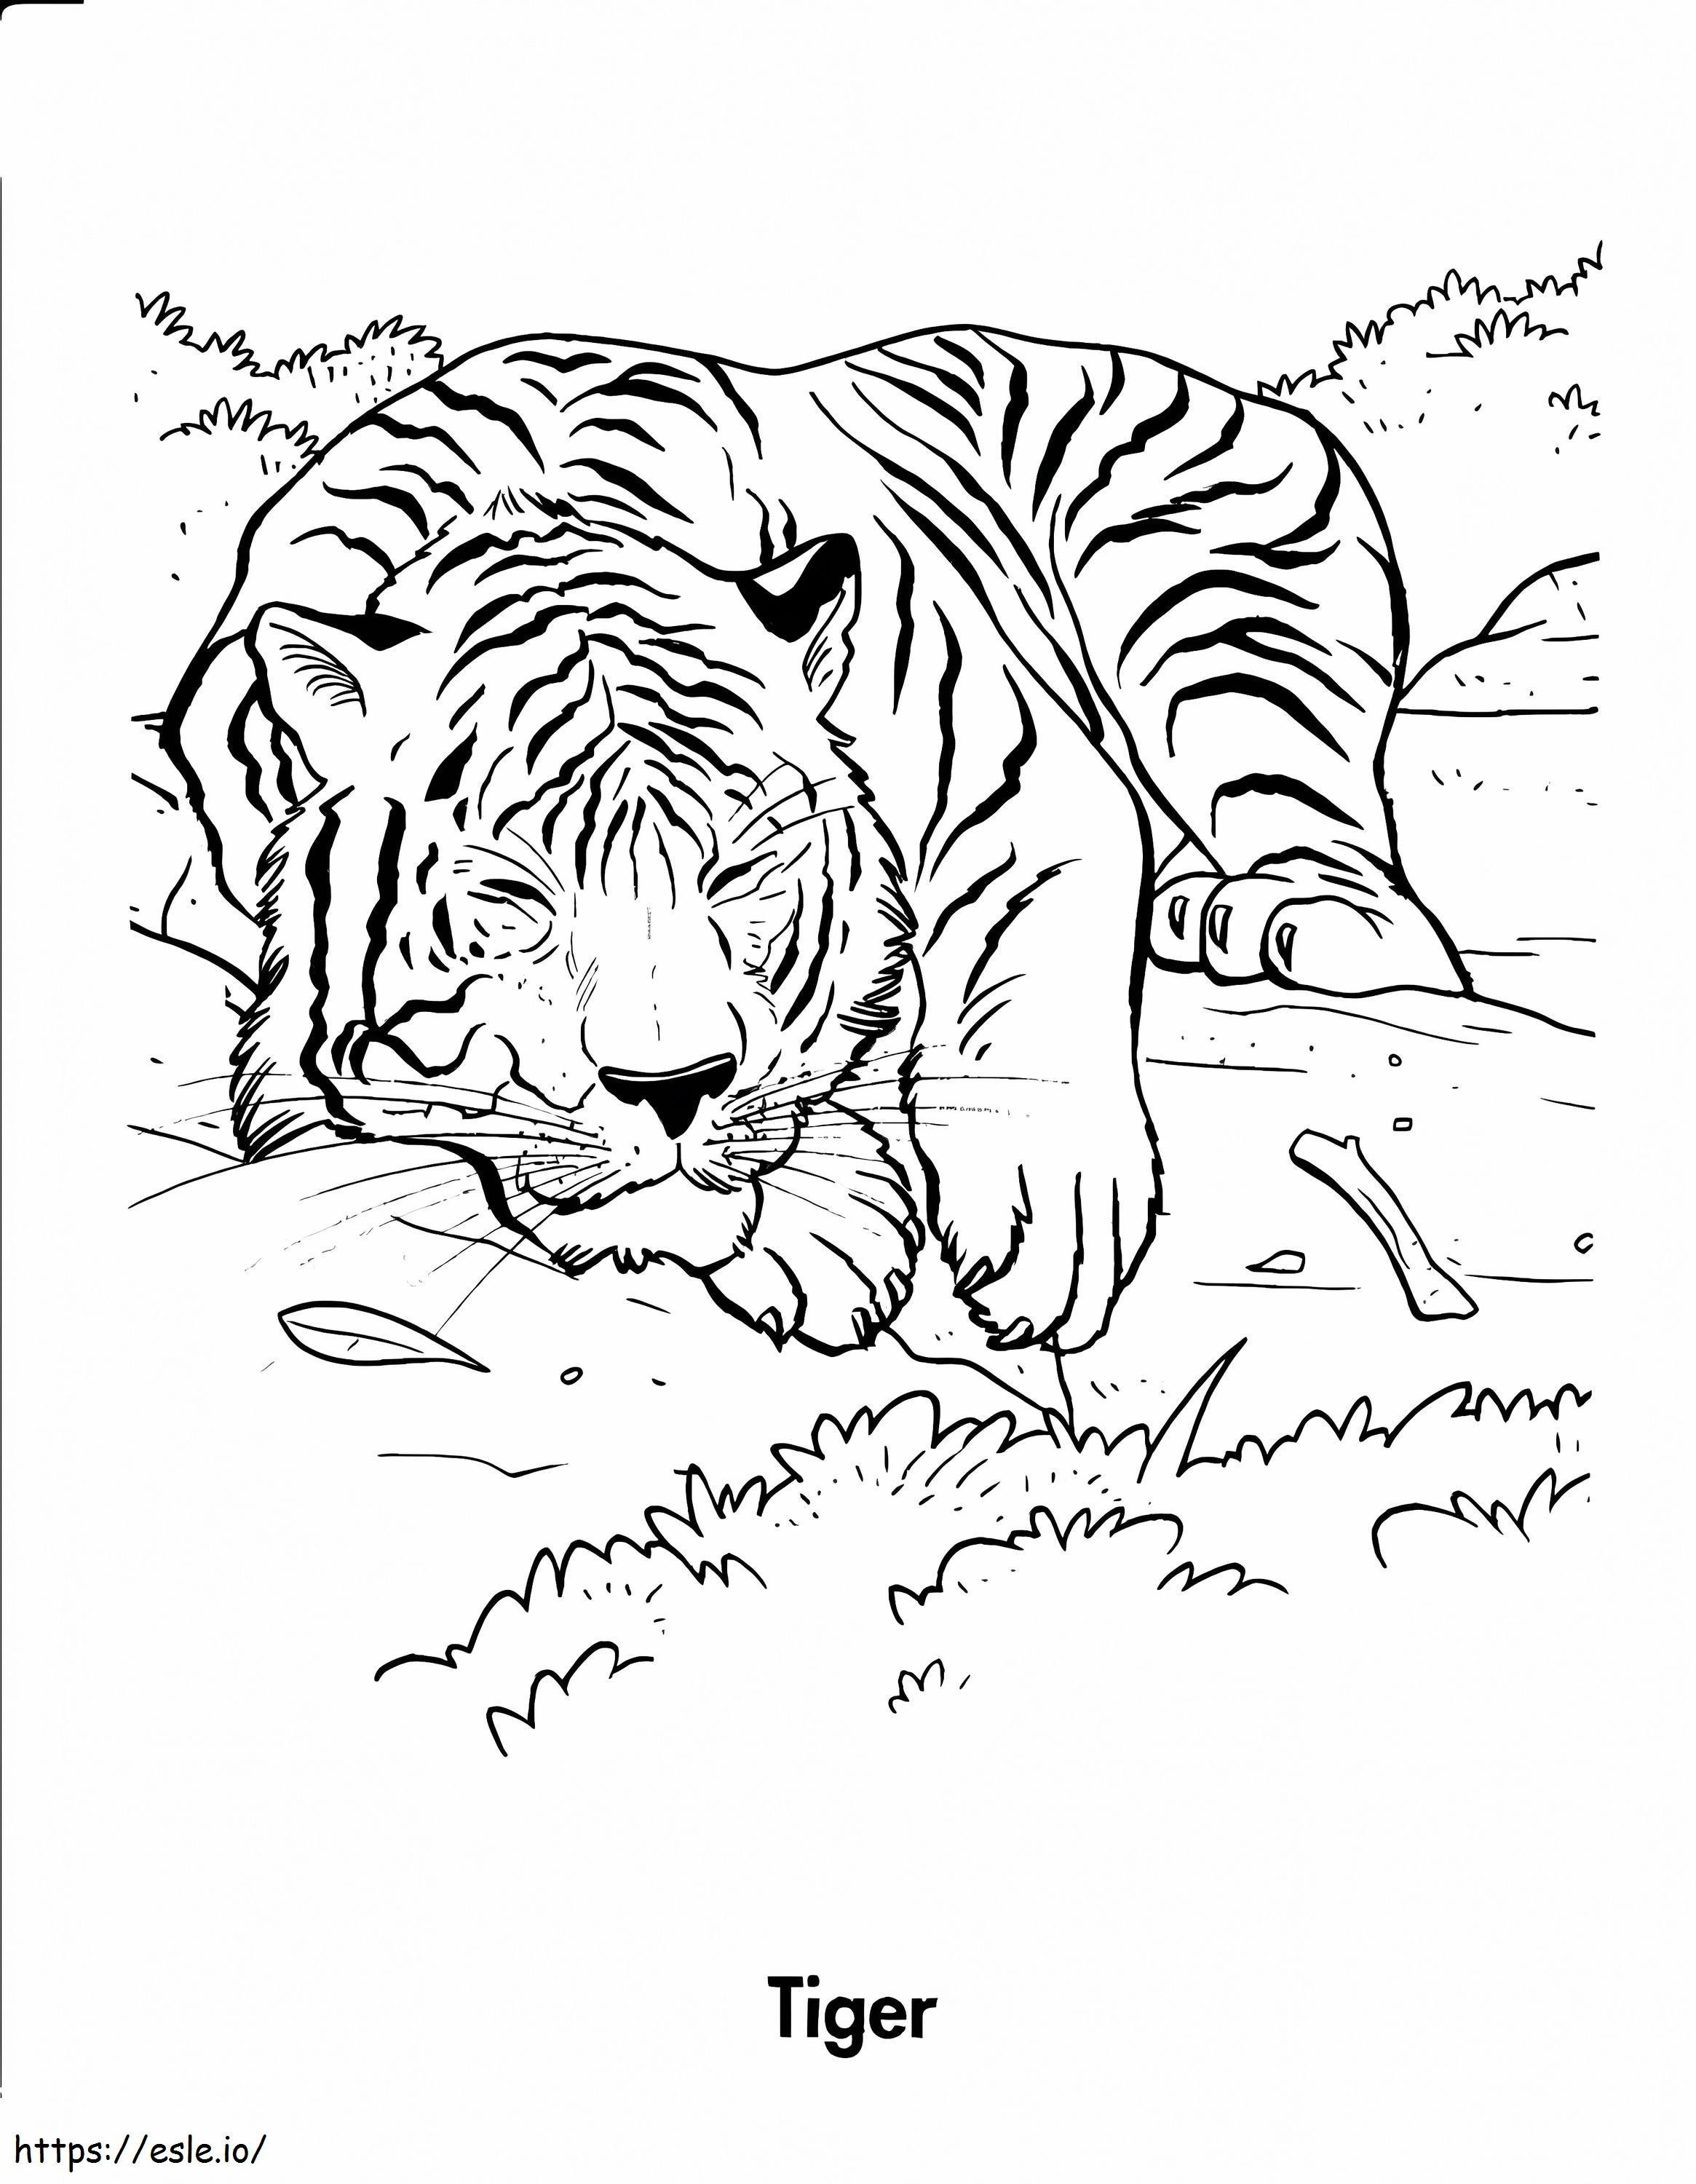 Sleeping Tiger coloring page